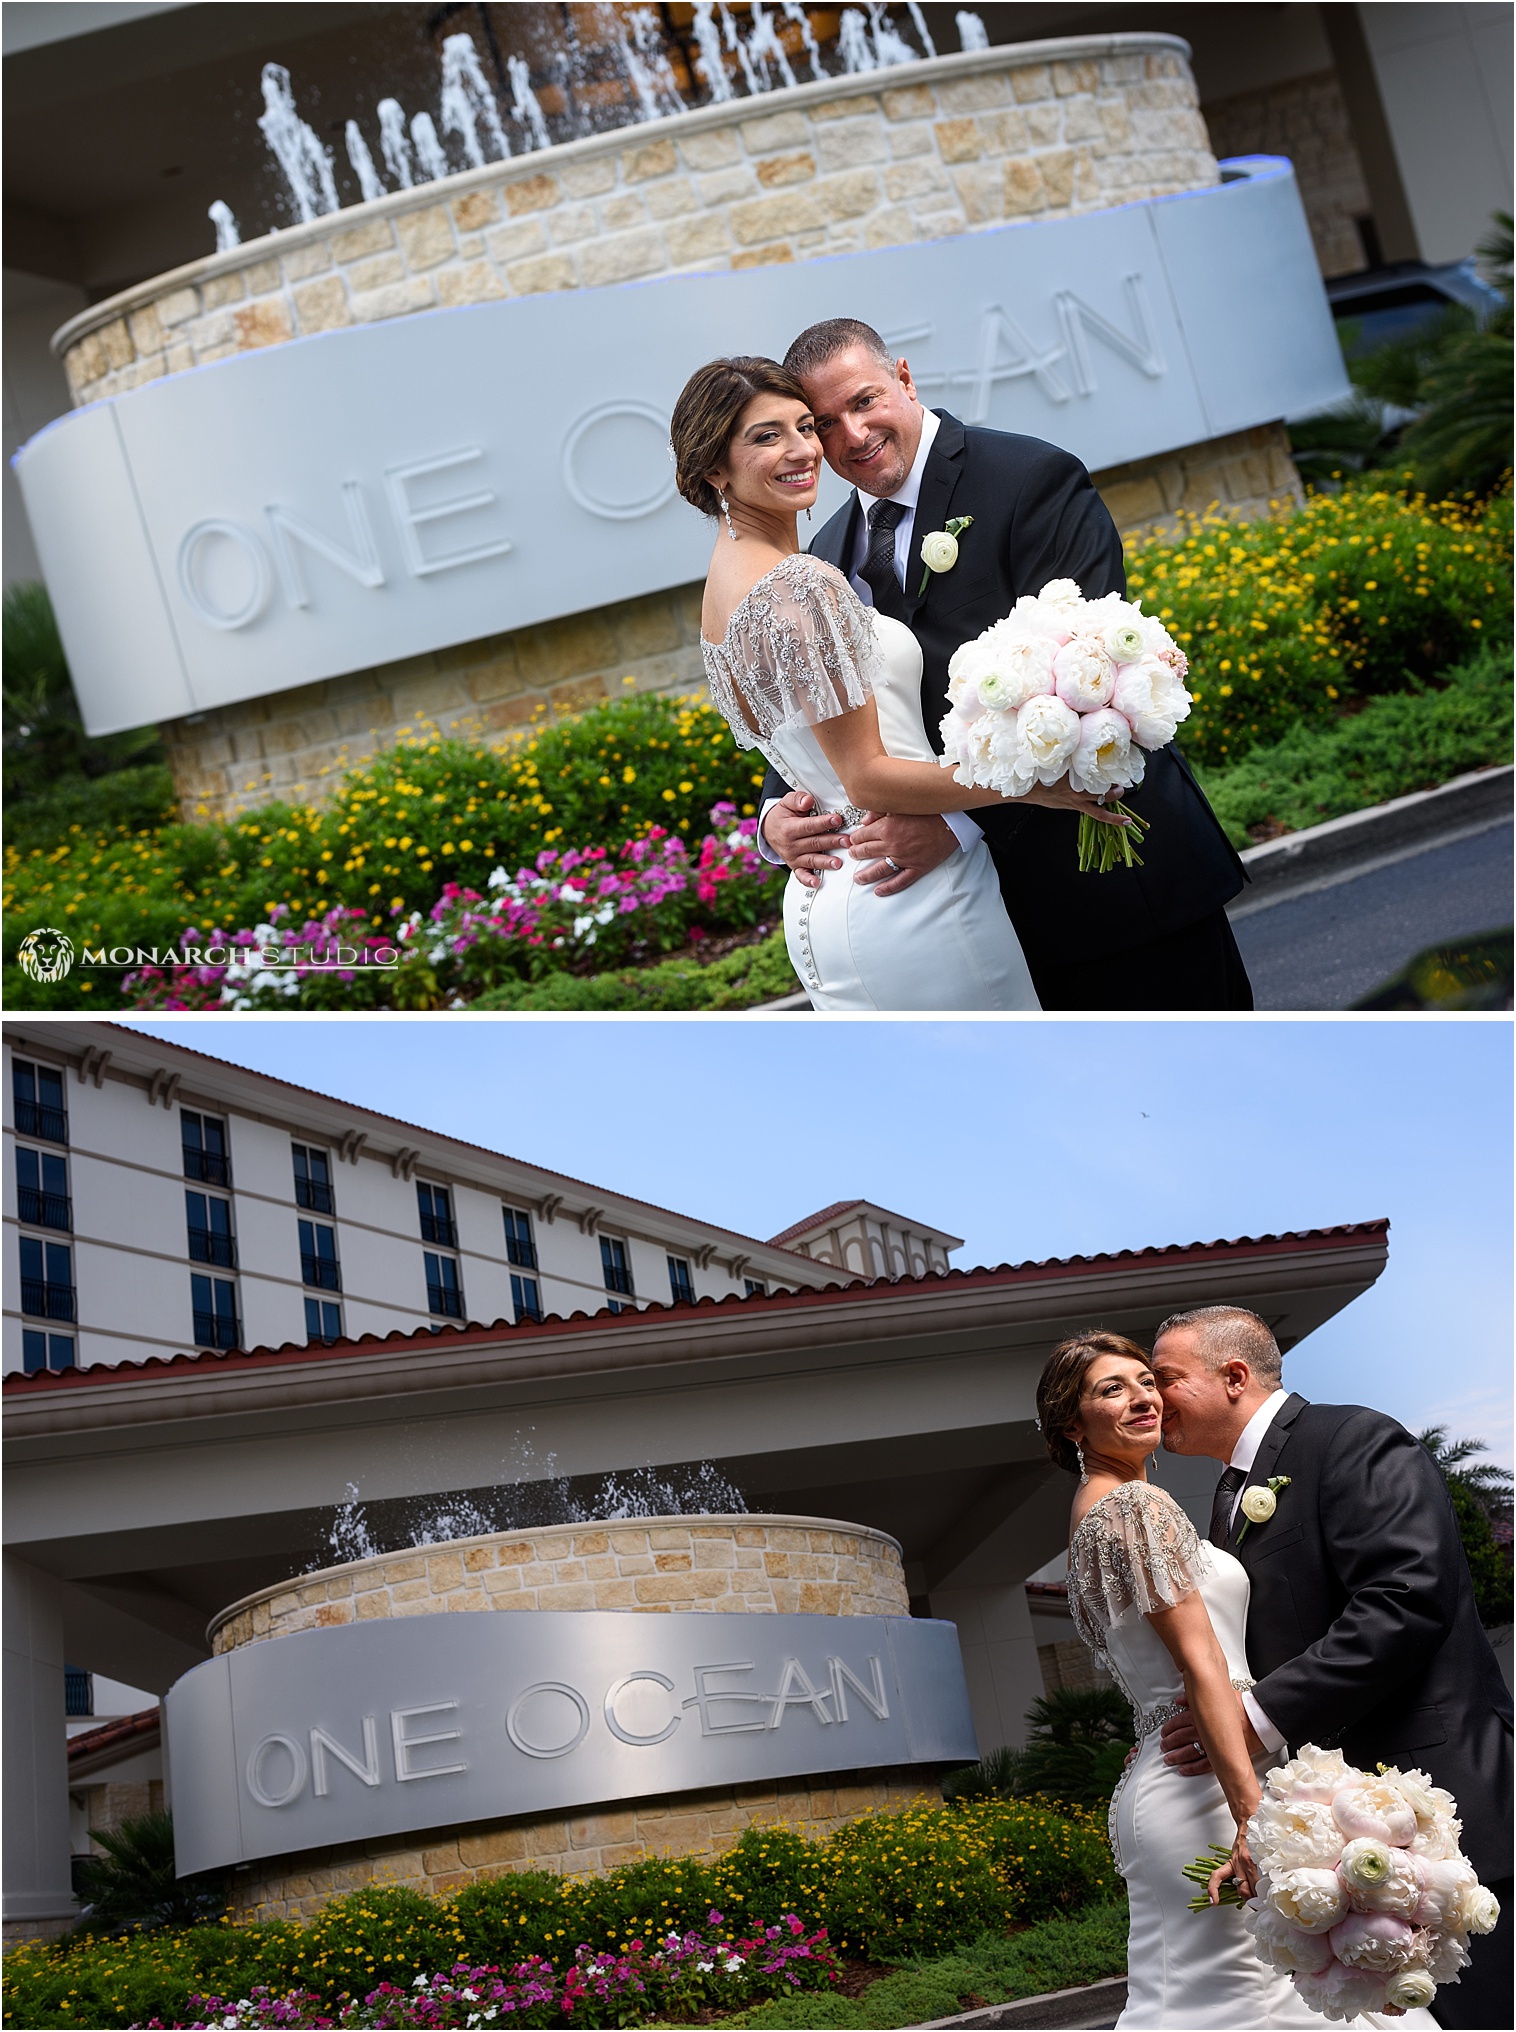 Jacksonville-Wedding-Photographer-One-Ocean-052.jpg